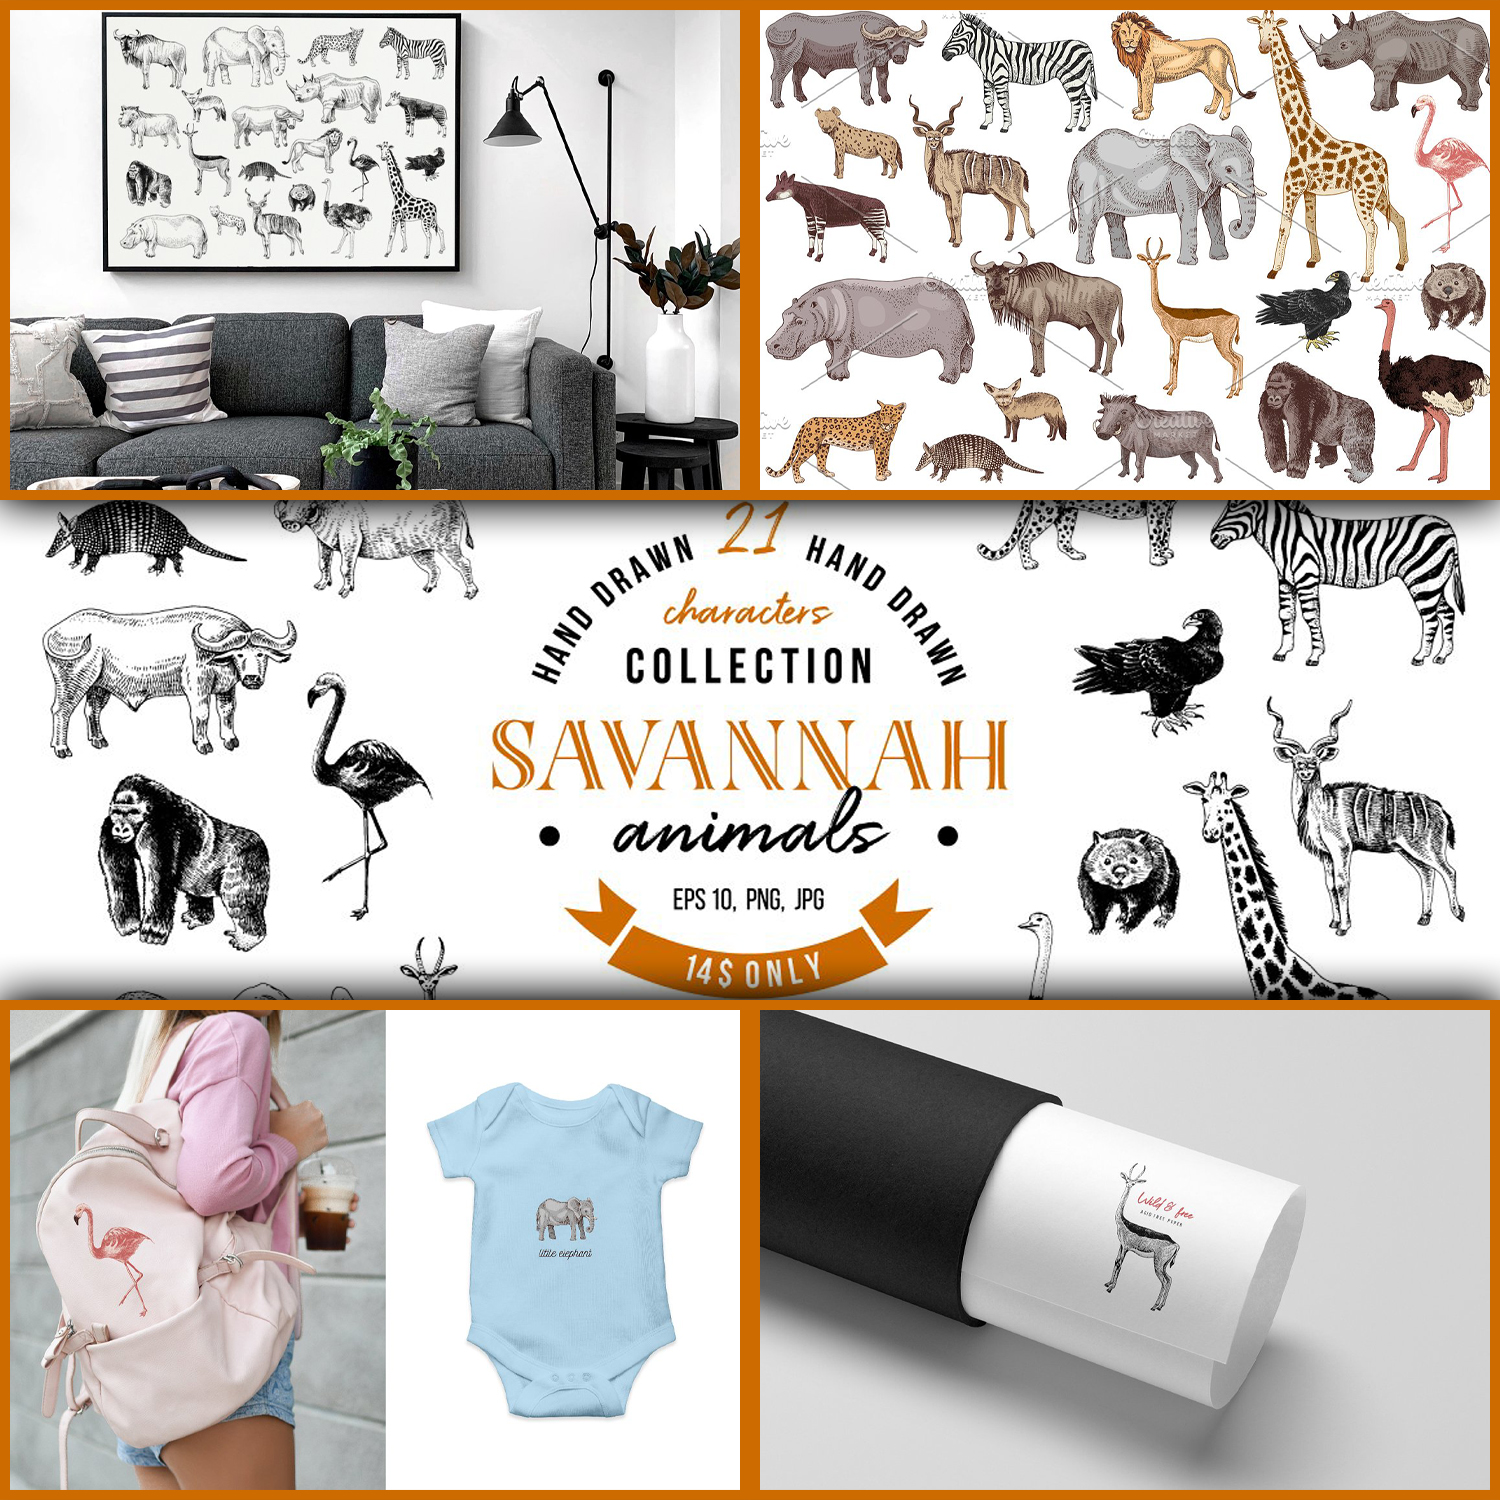 Images with hand drawn savannah animals.